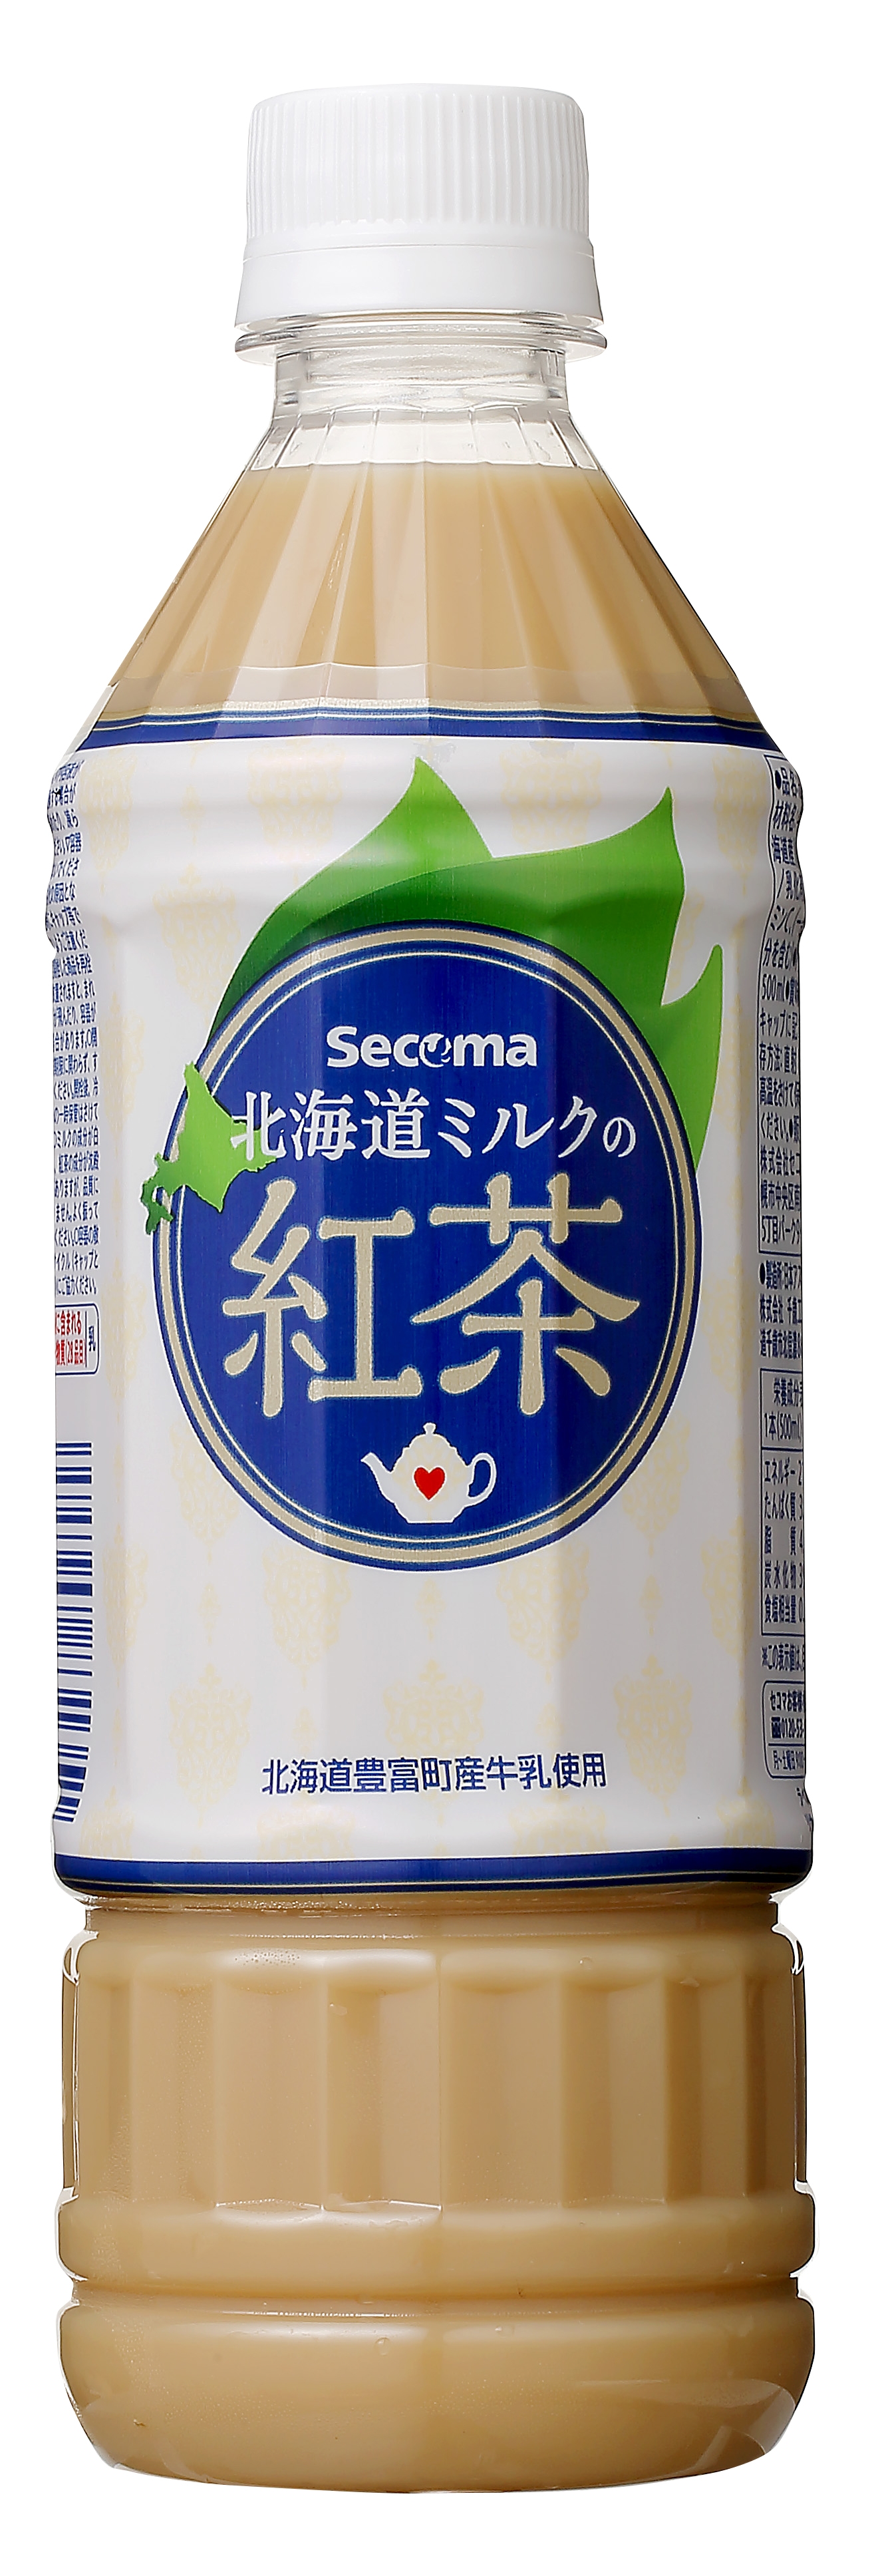 Secoma 北海道ミルクの紅茶 500ml 24本入 セイコーマート公式通販